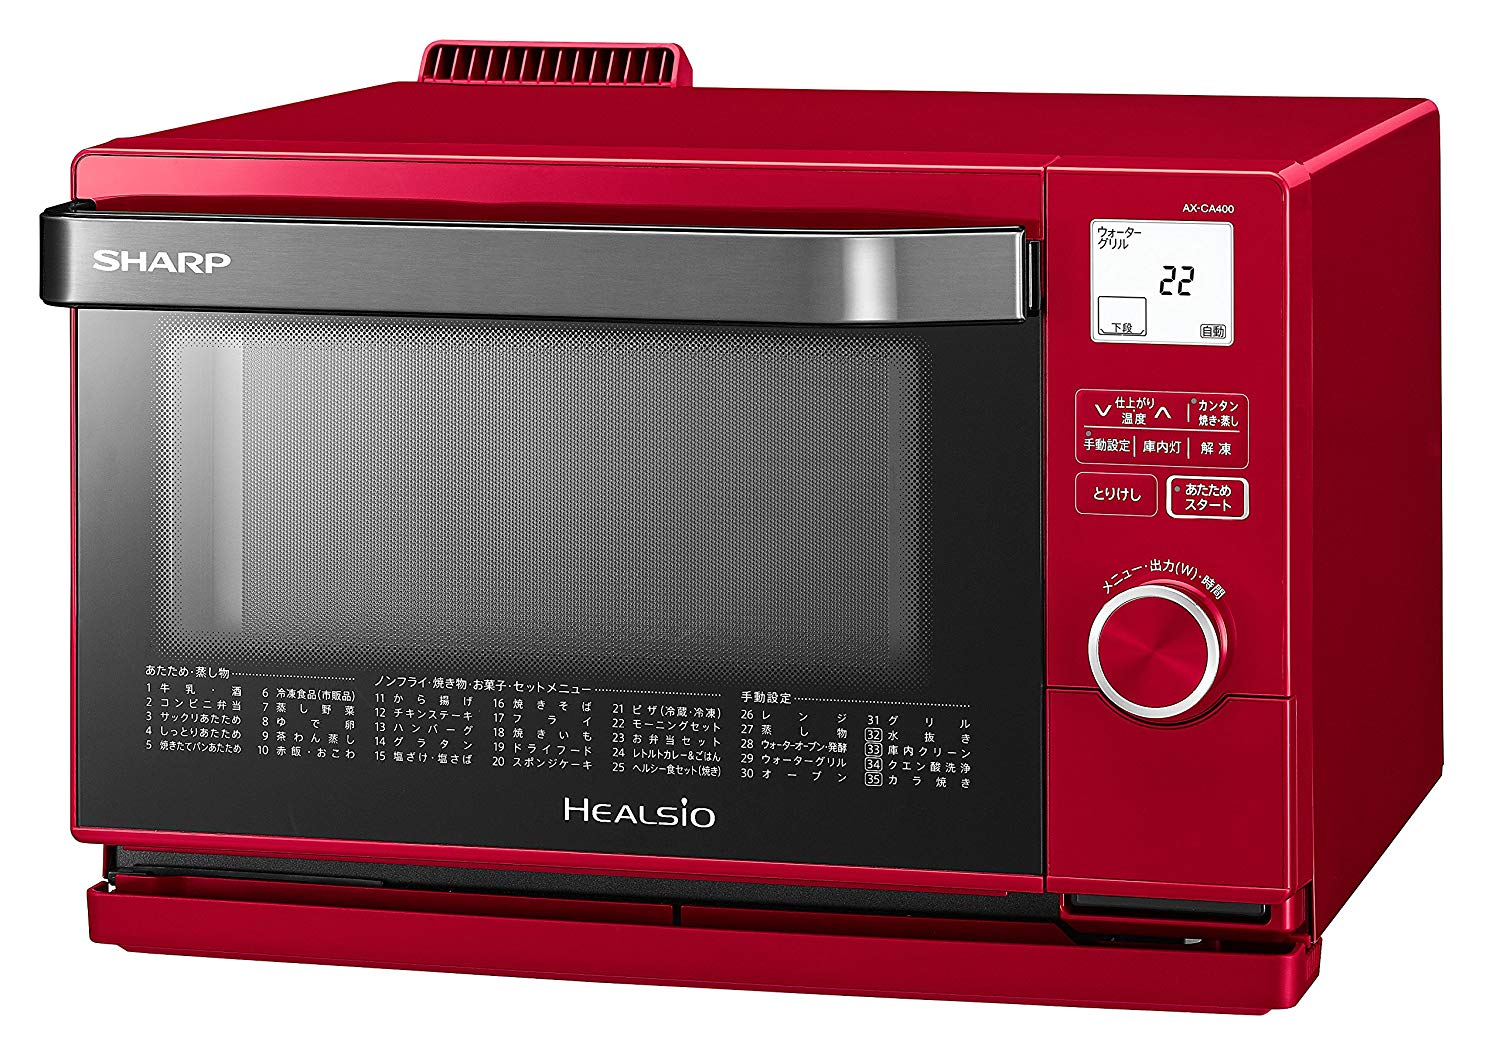 Sharp Steam Oven herusio (HEALSIO) 18l 1 Tier Cooking Red Ax - CA400 – R